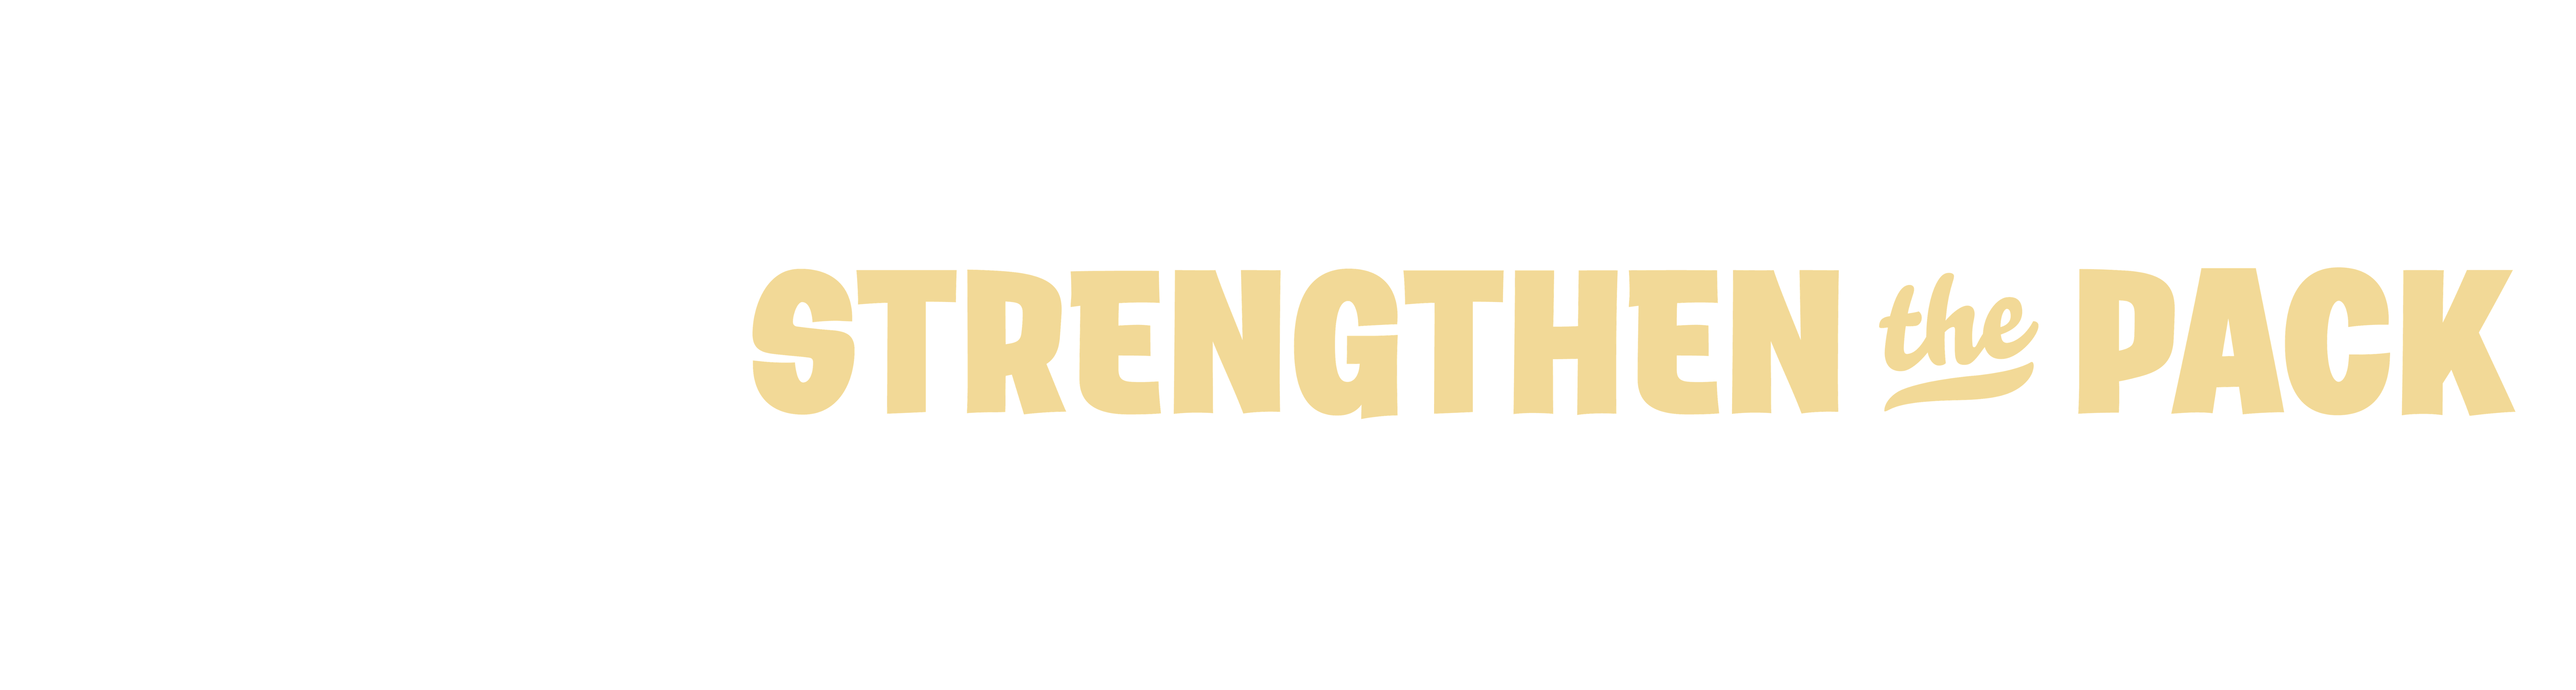 Strengthen the Pack Logo